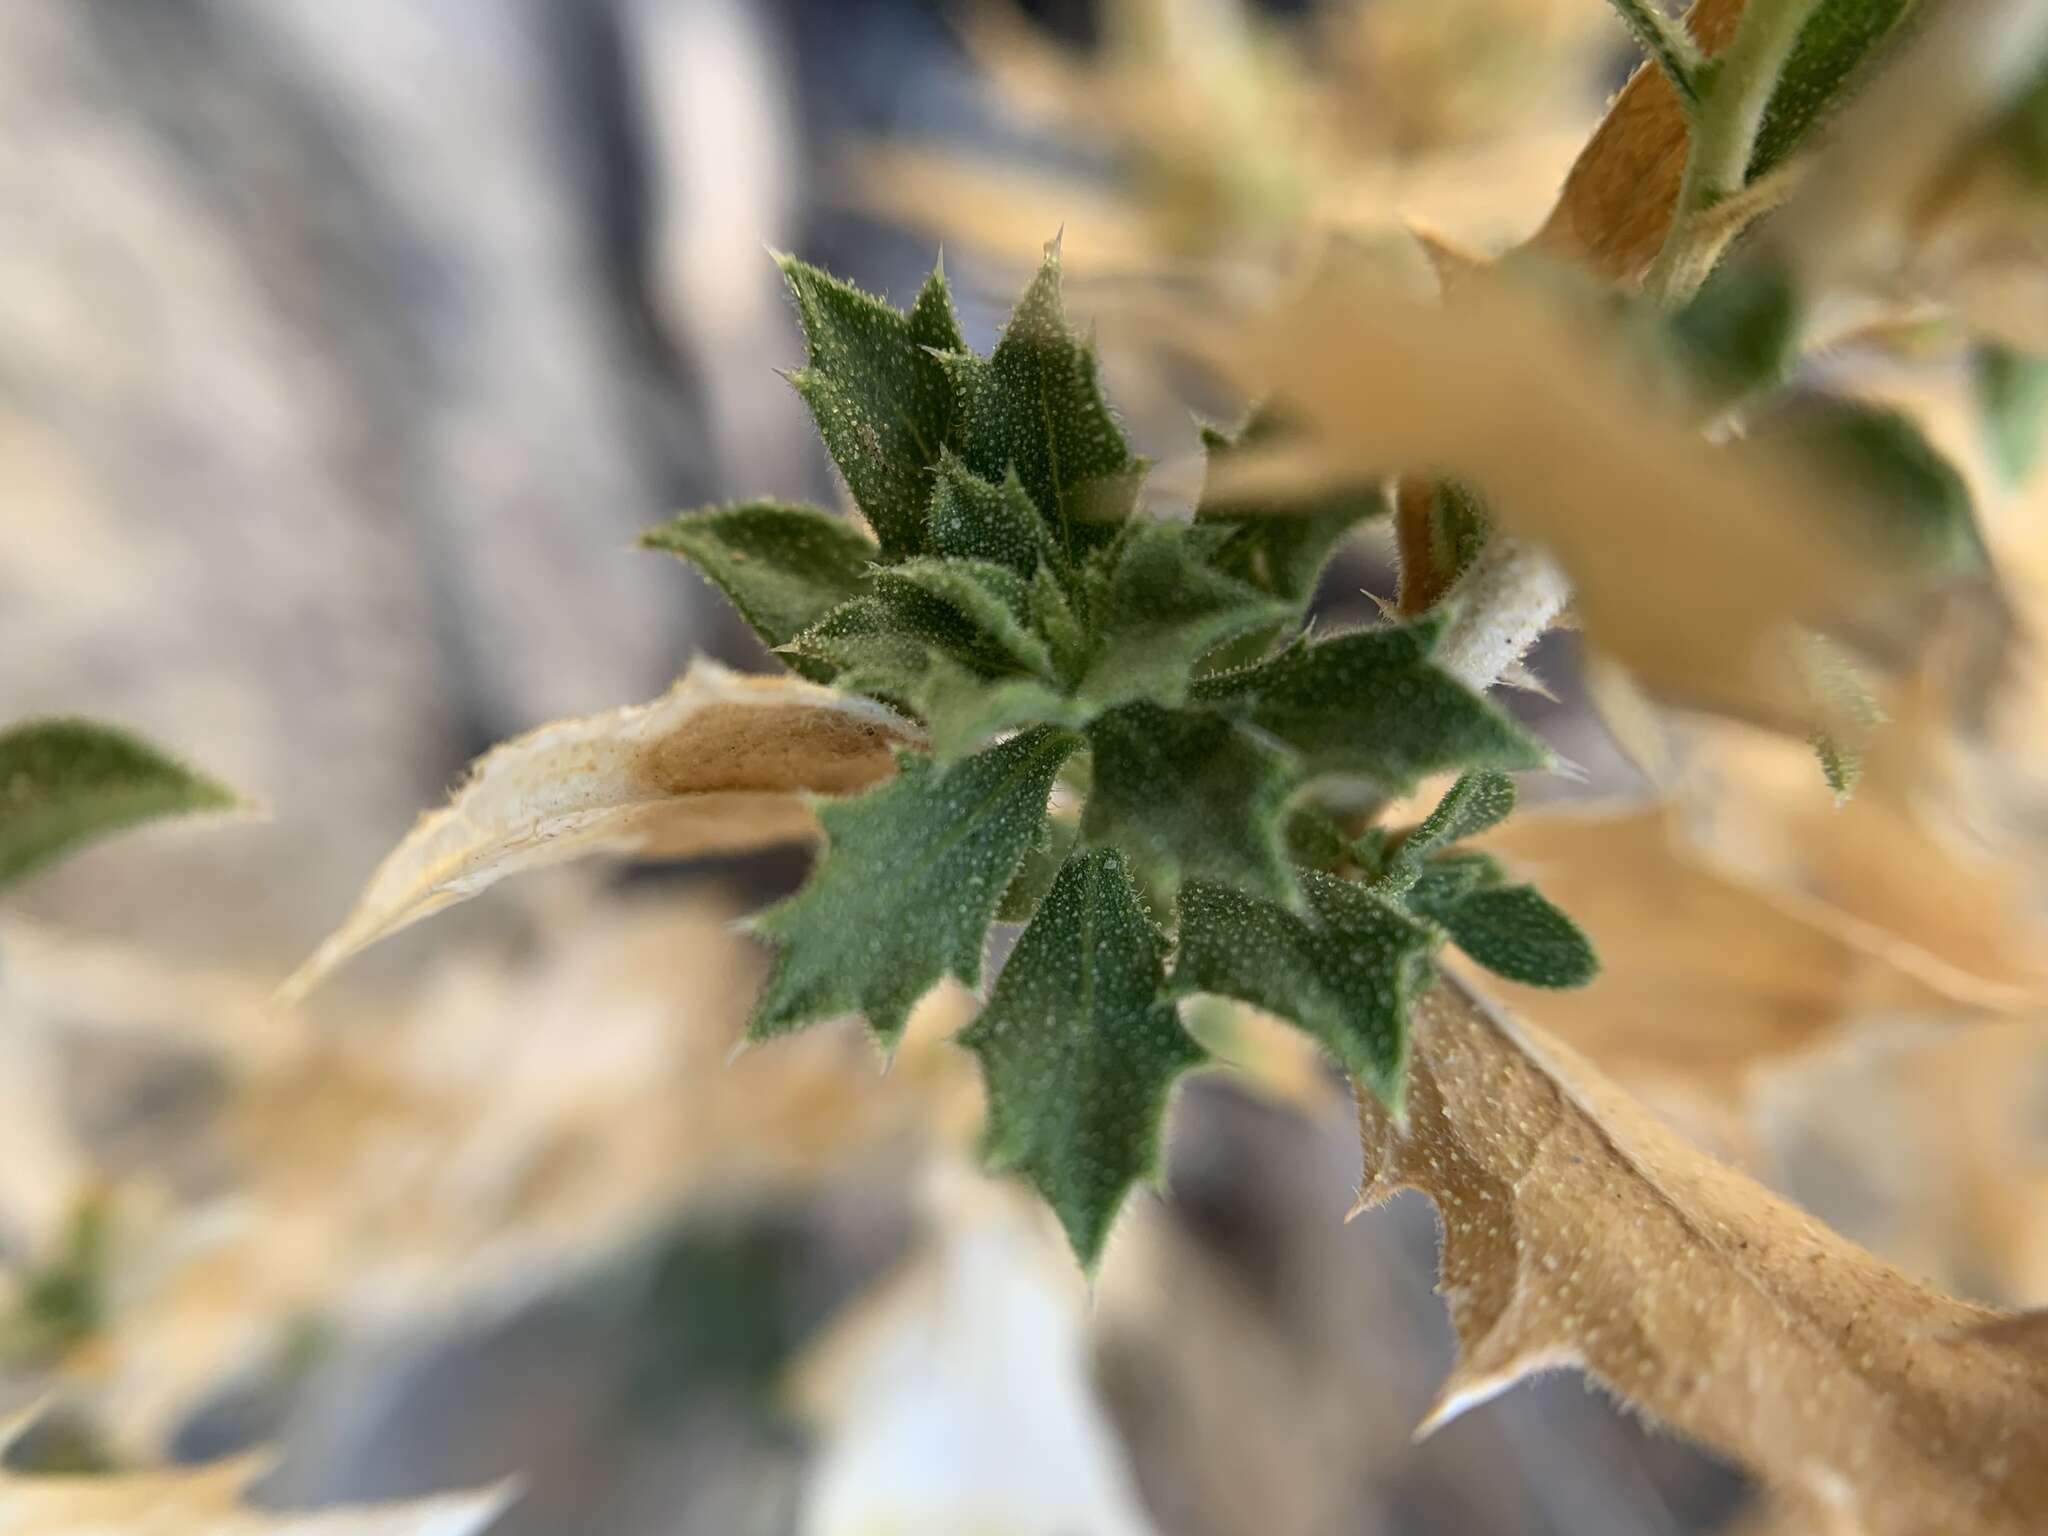 Image of brickellbush goldenweed